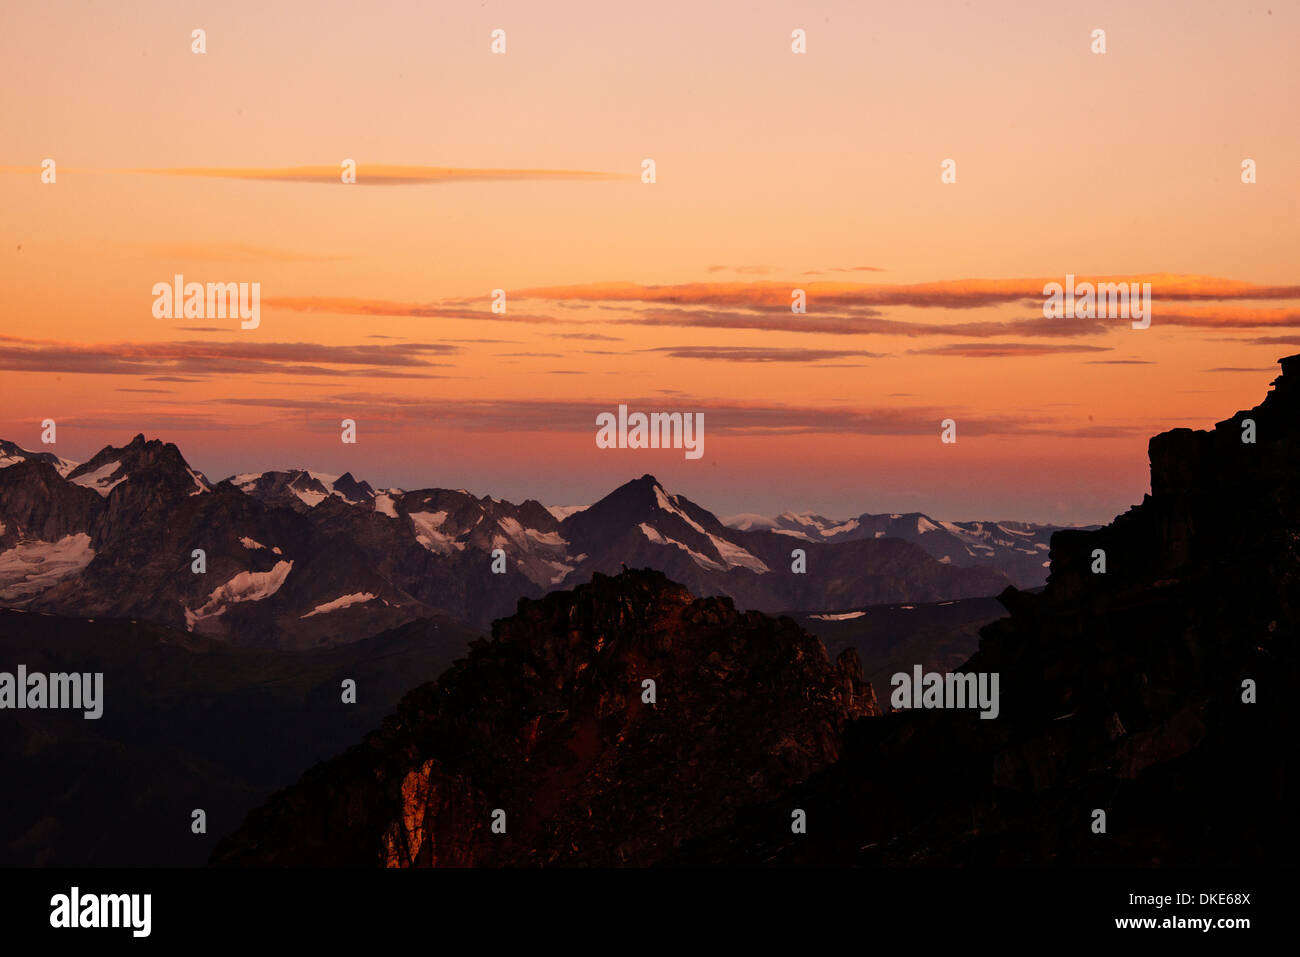 A brilliant sunrise over mountain peaks in the Canadian Bugaboo range. Stock Photo